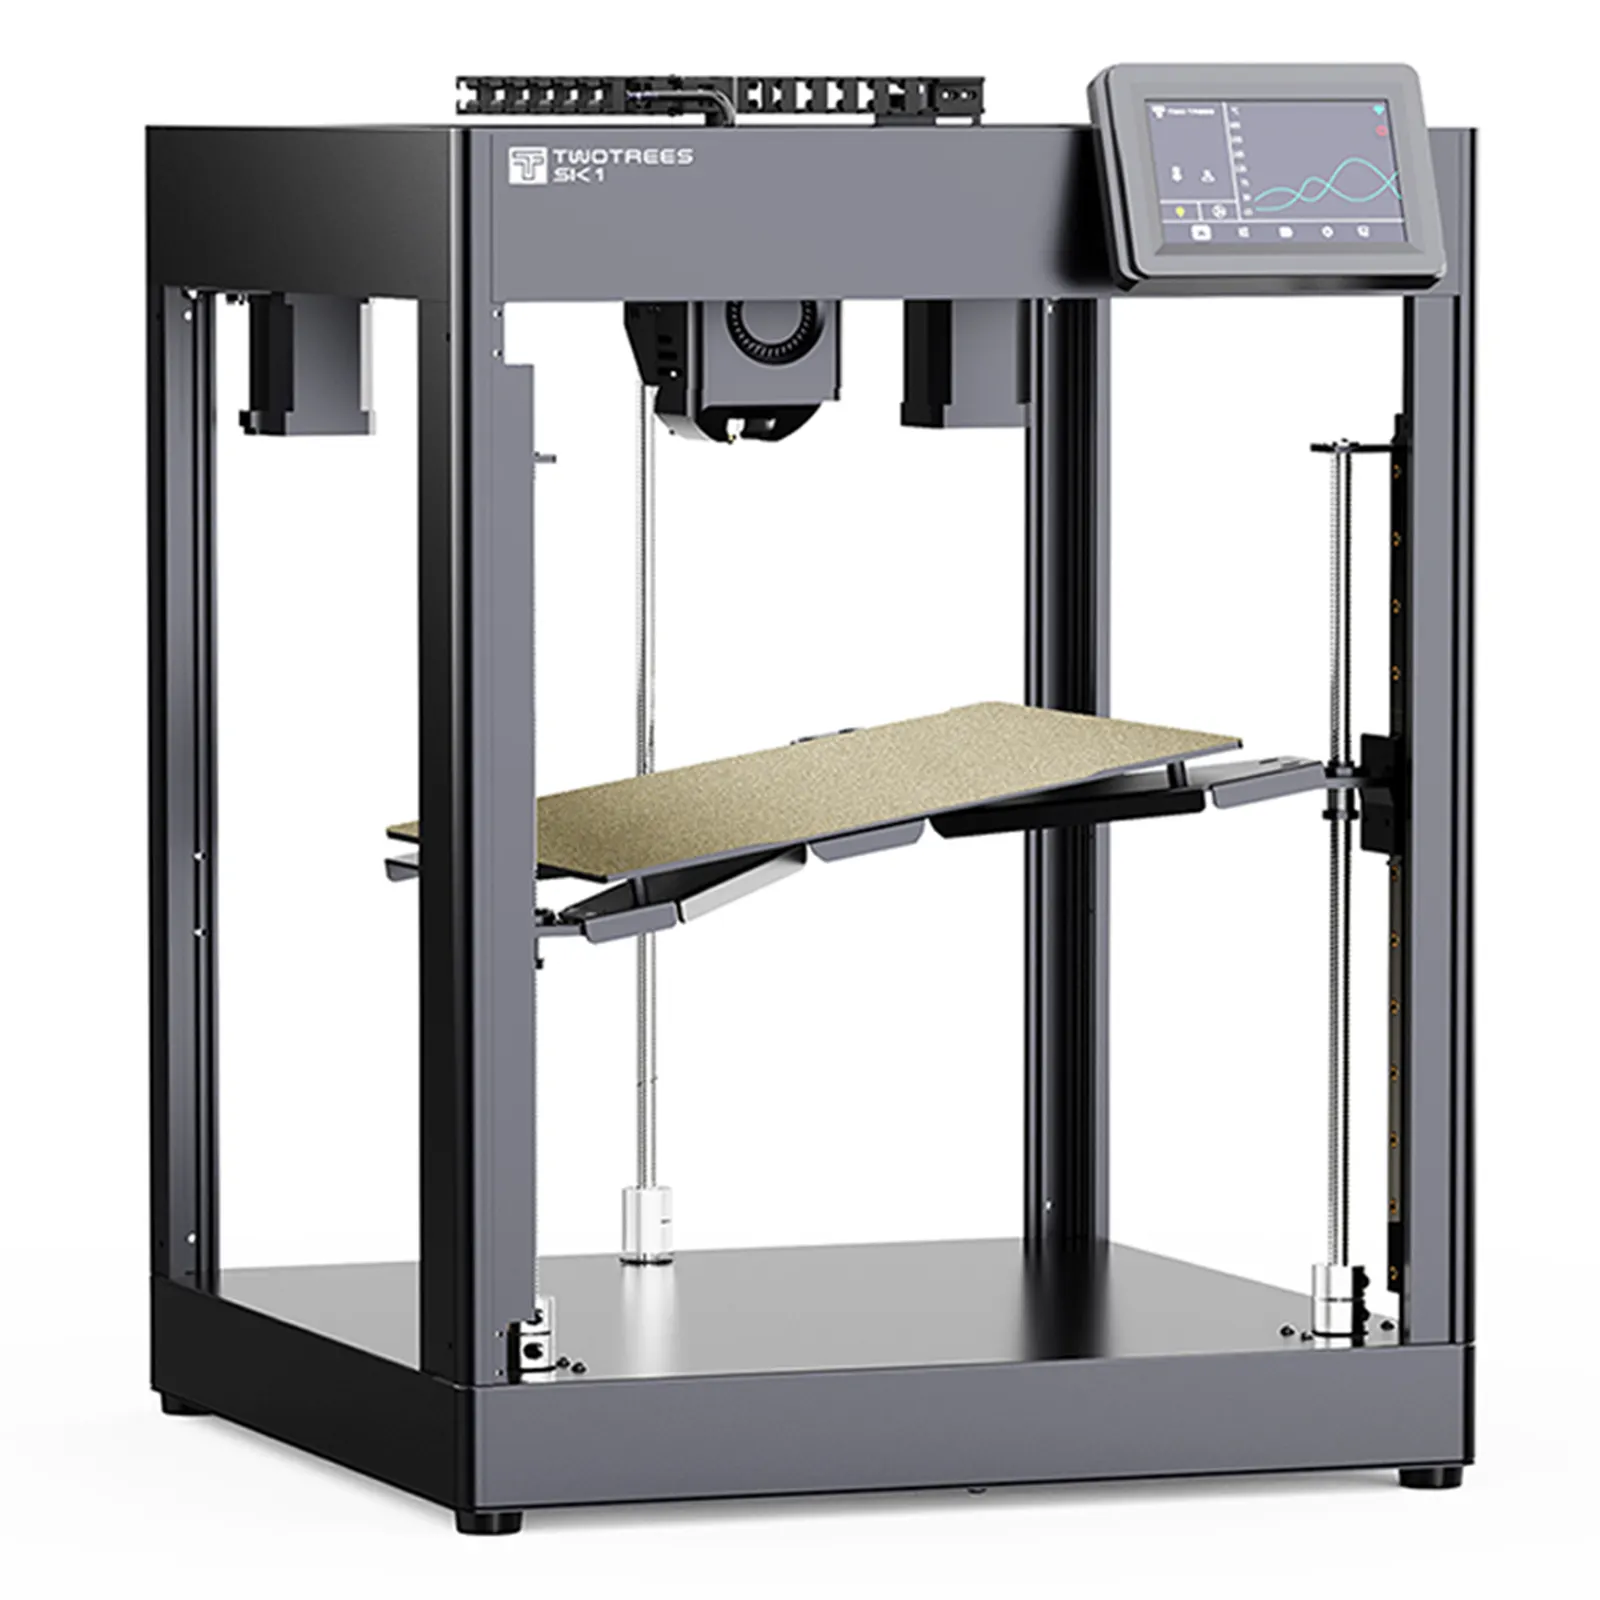 TWOTREES-impora 3D 프린터 SK1 700 mm/s 완전 자동 레벨링 고정밀 해상도 인쇄 교육 FDM 클리퍼 3D 프린터